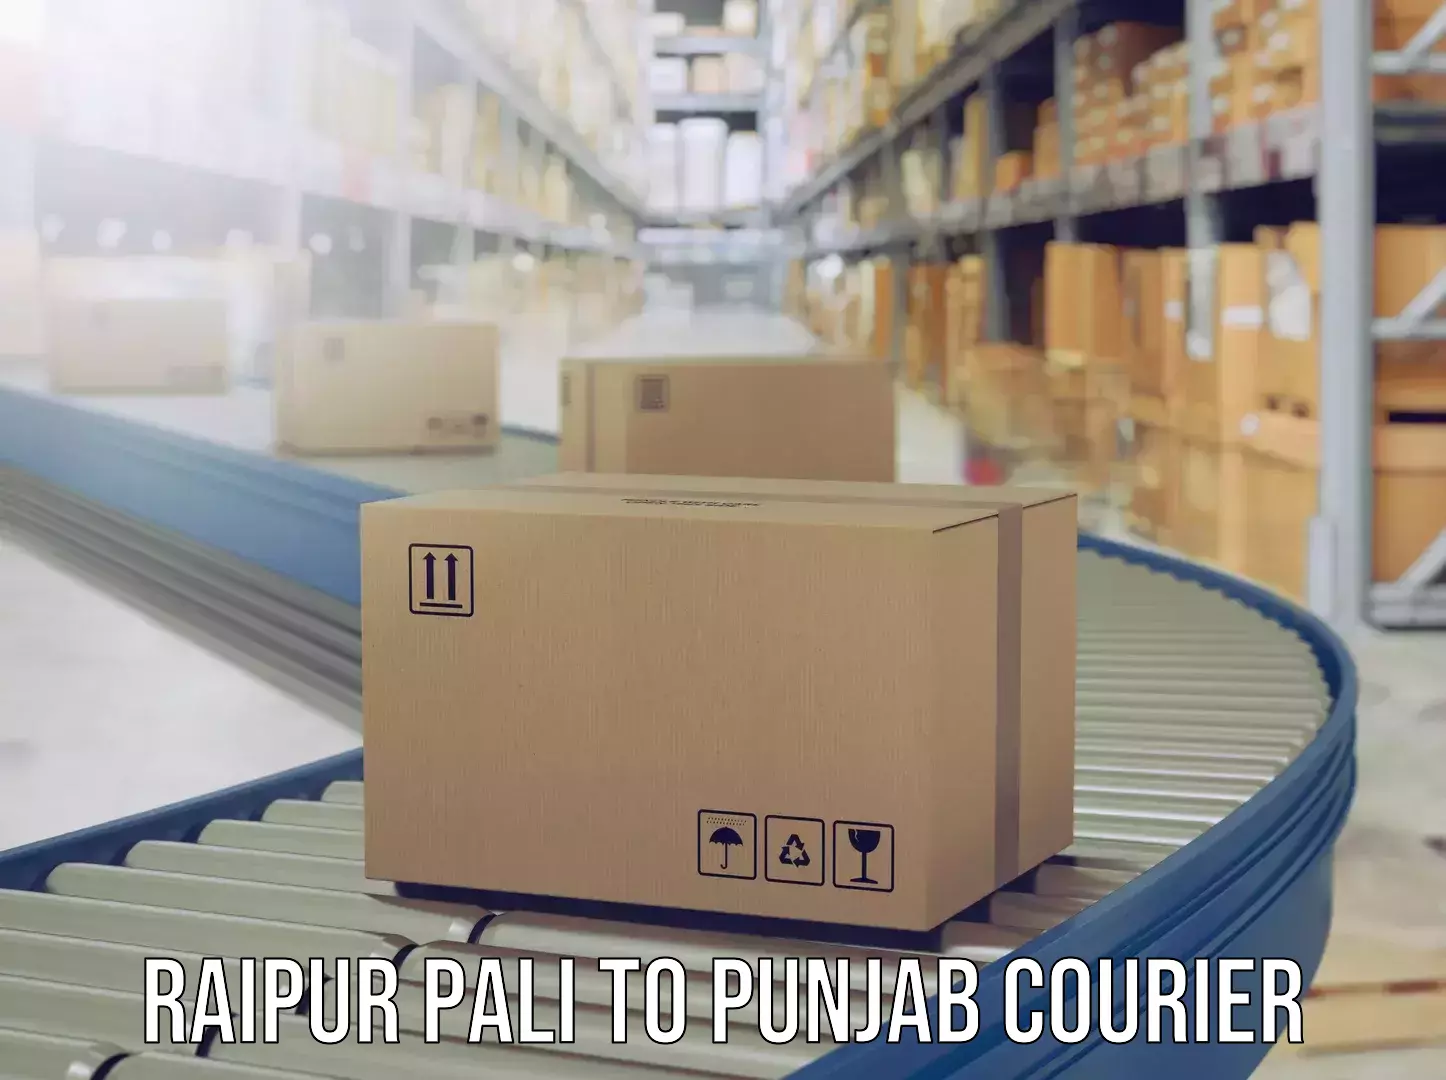 Luggage delivery estimate Raipur Pali to Punjab